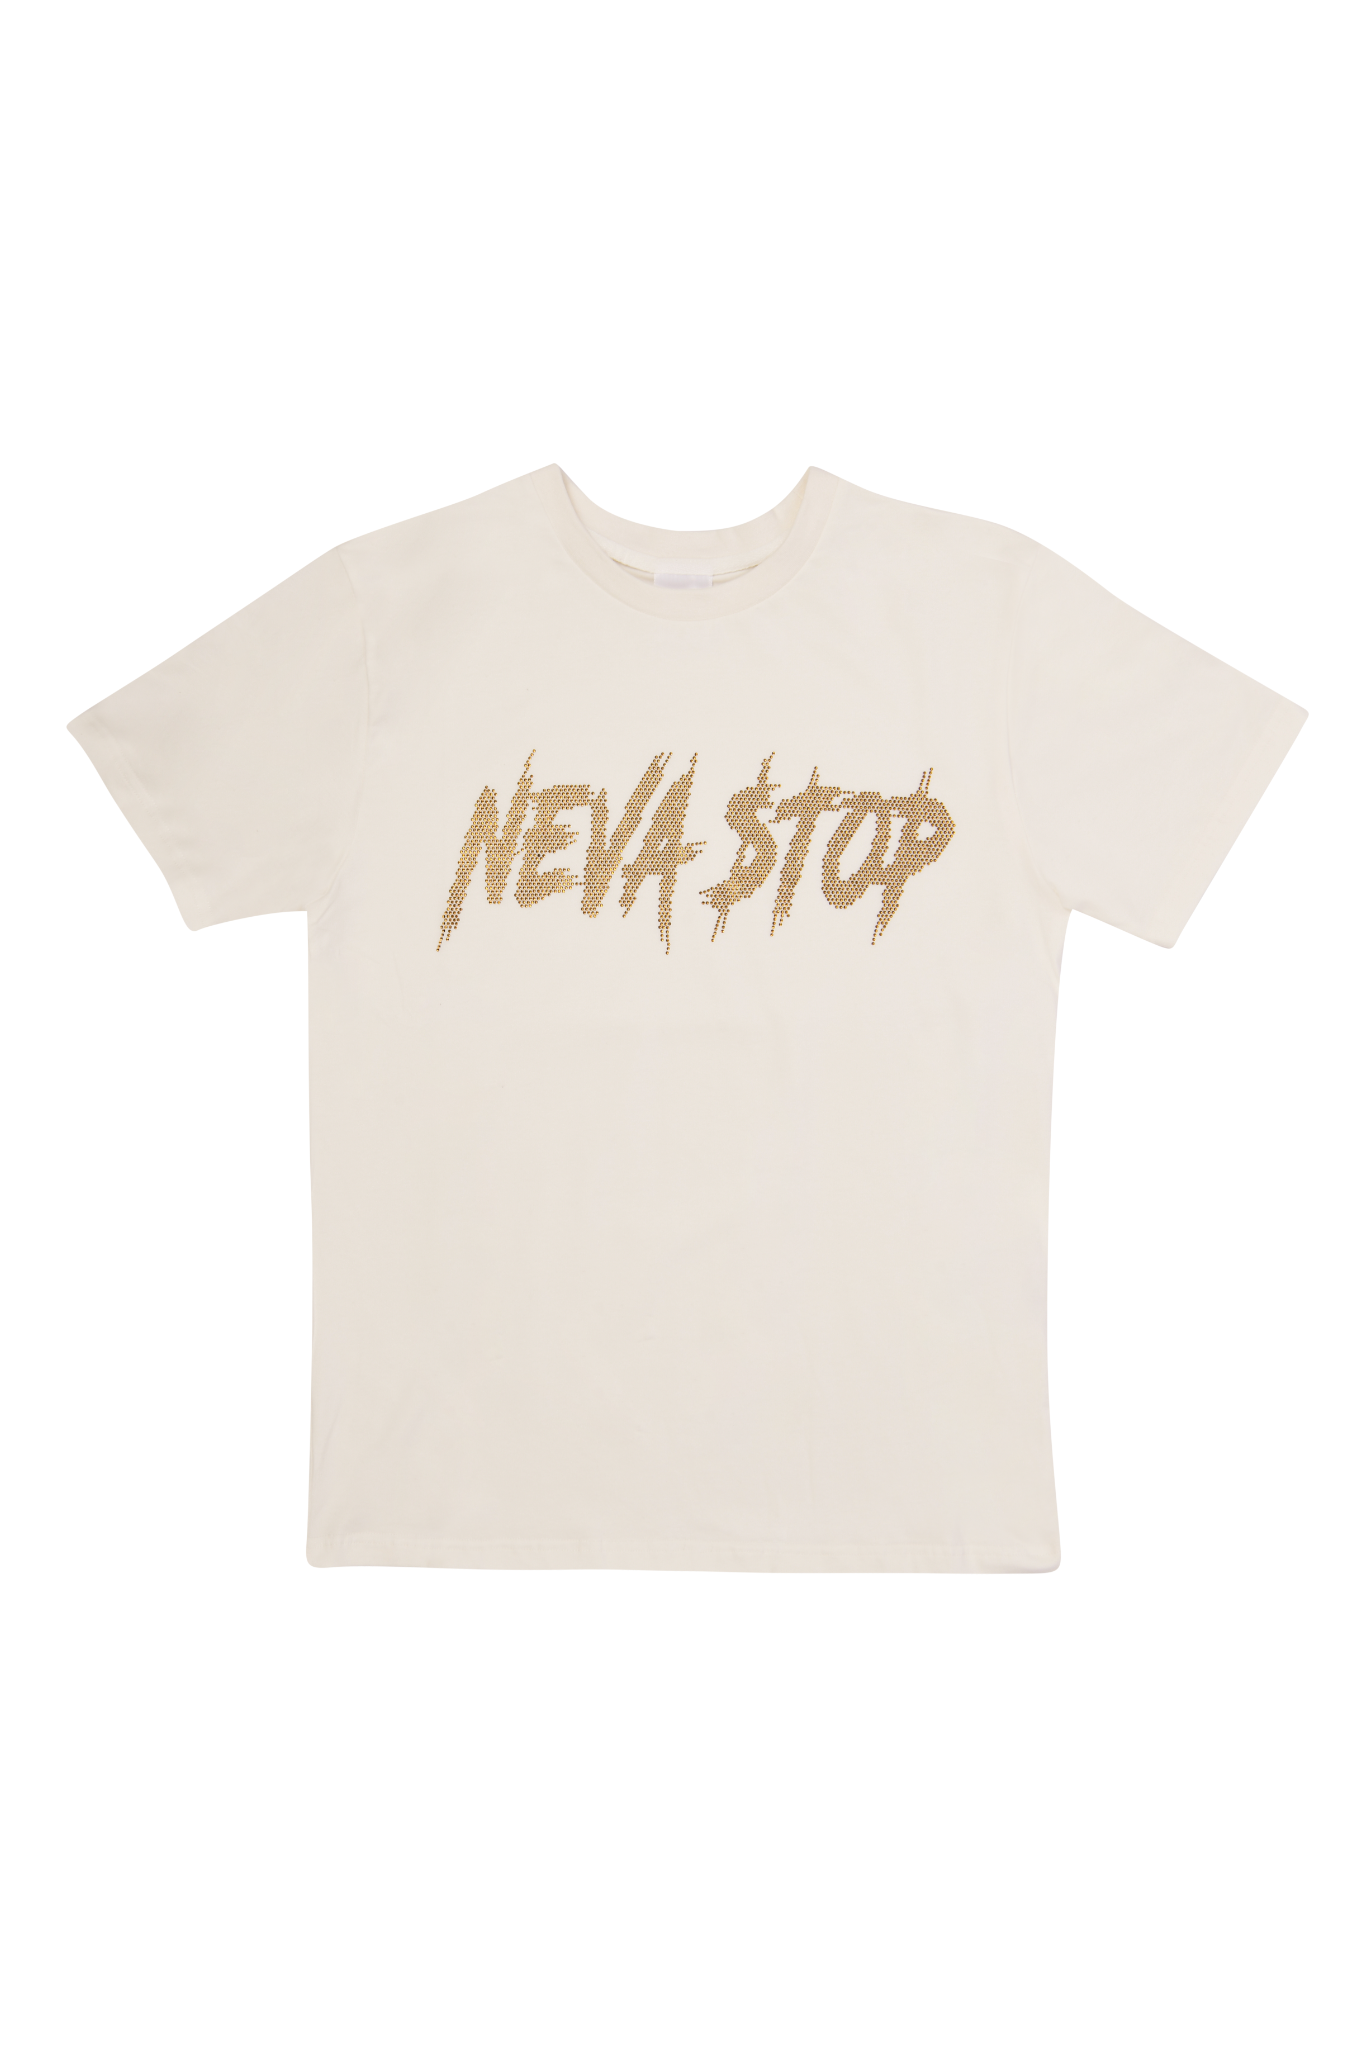 NEVA STOP Rhinstone T-Shirt